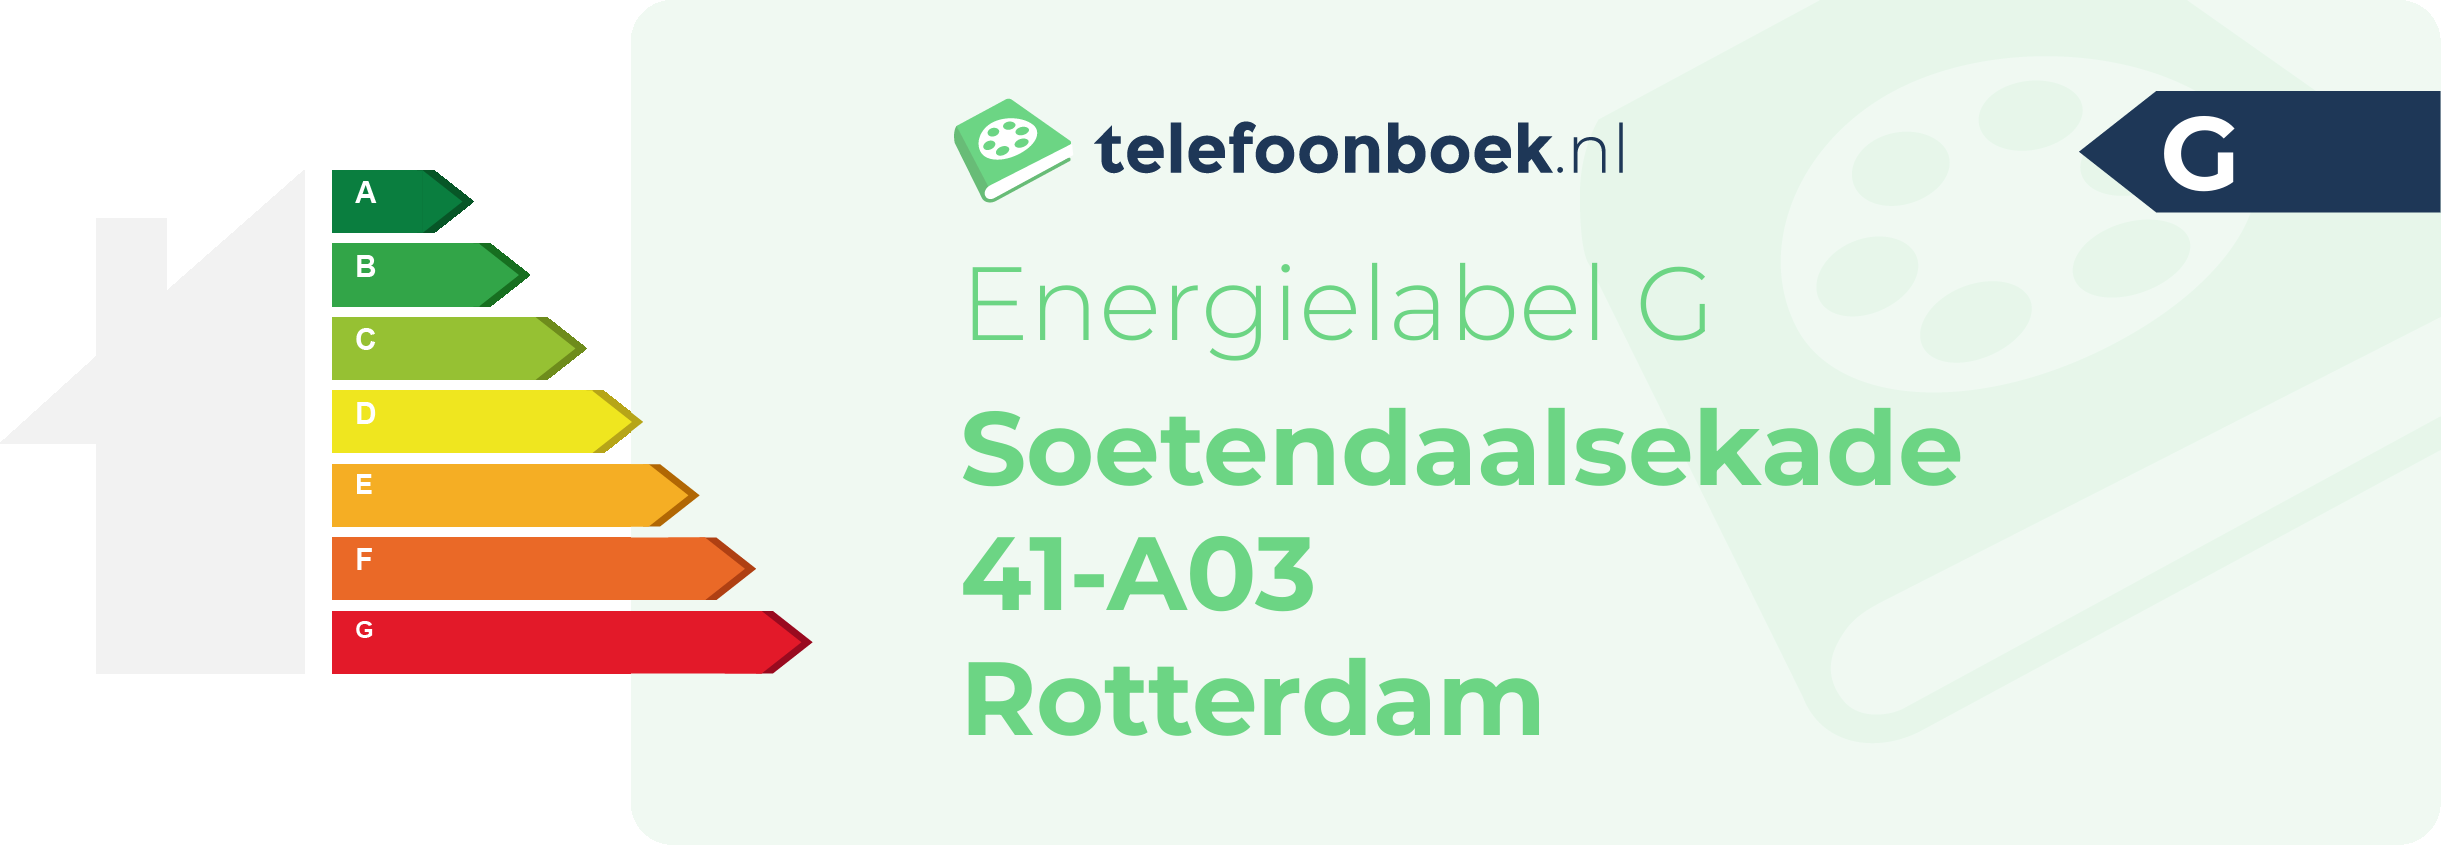 Energielabel Soetendaalsekade 41-A03 Rotterdam